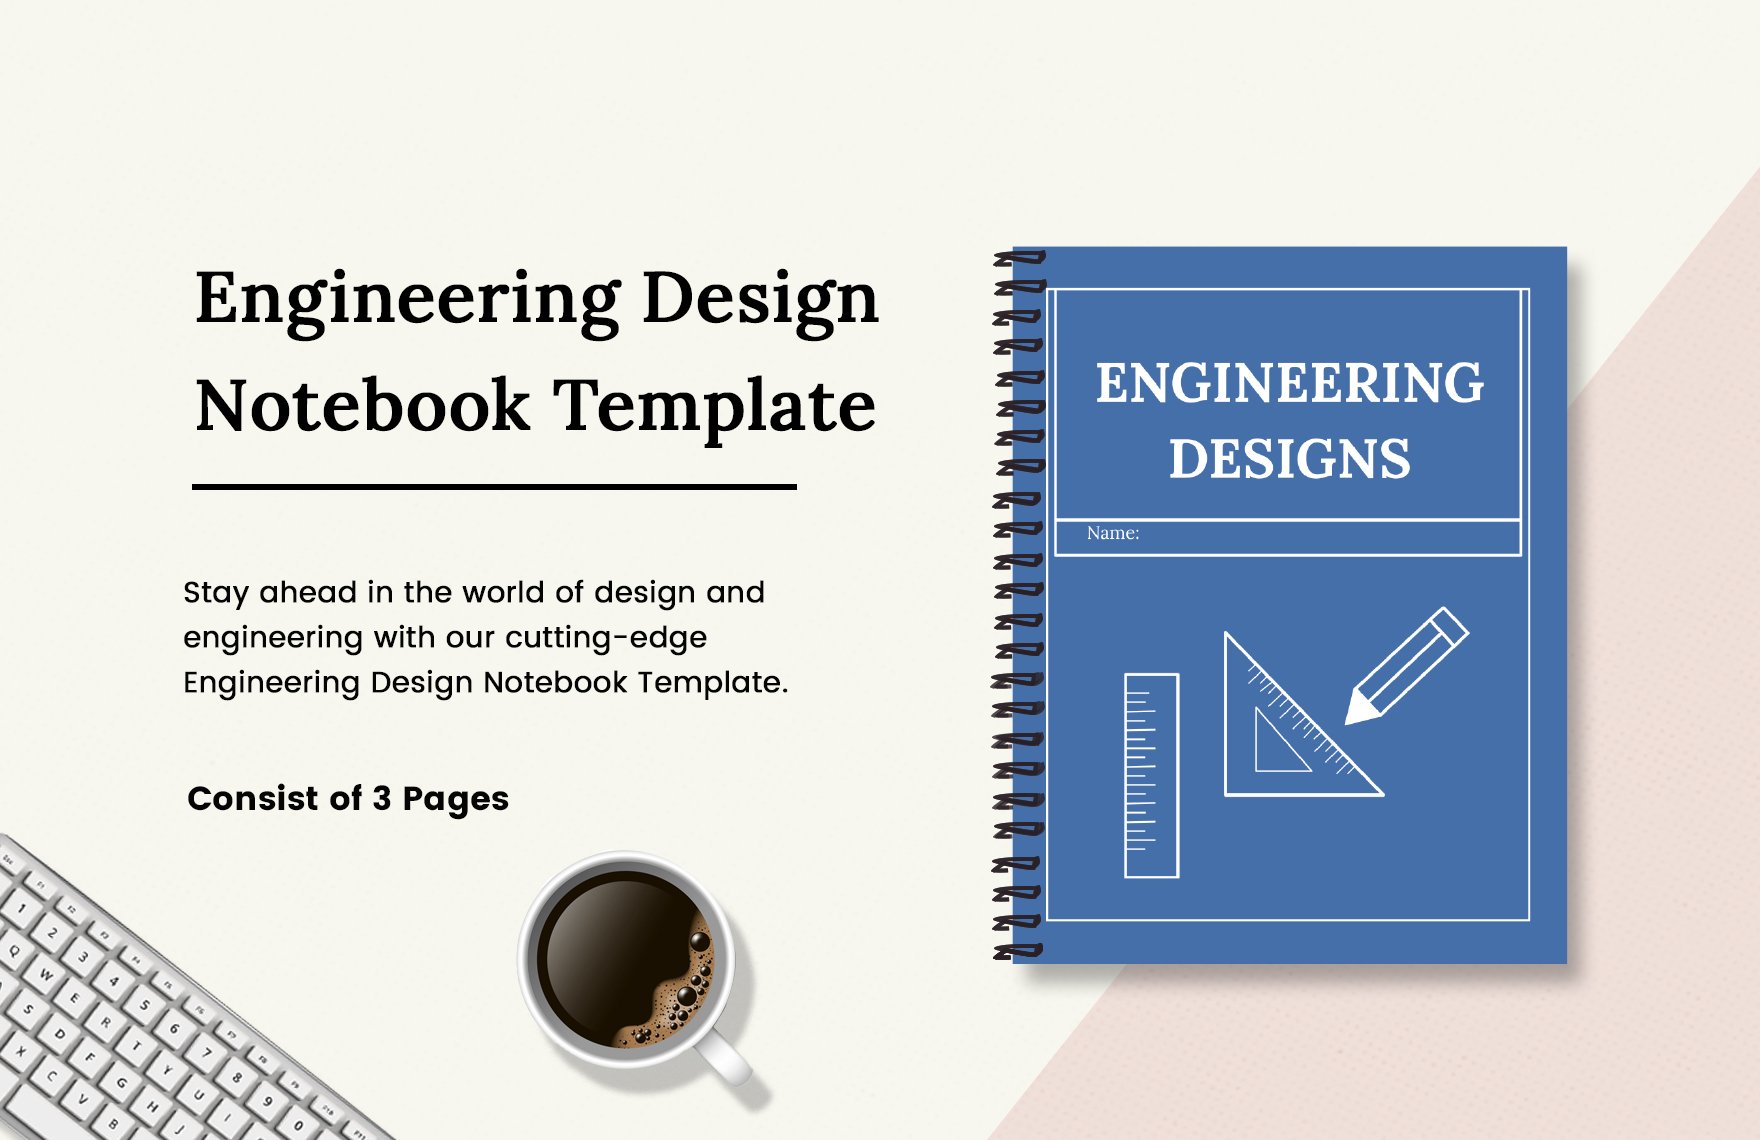 Engineering Design Notebook Template